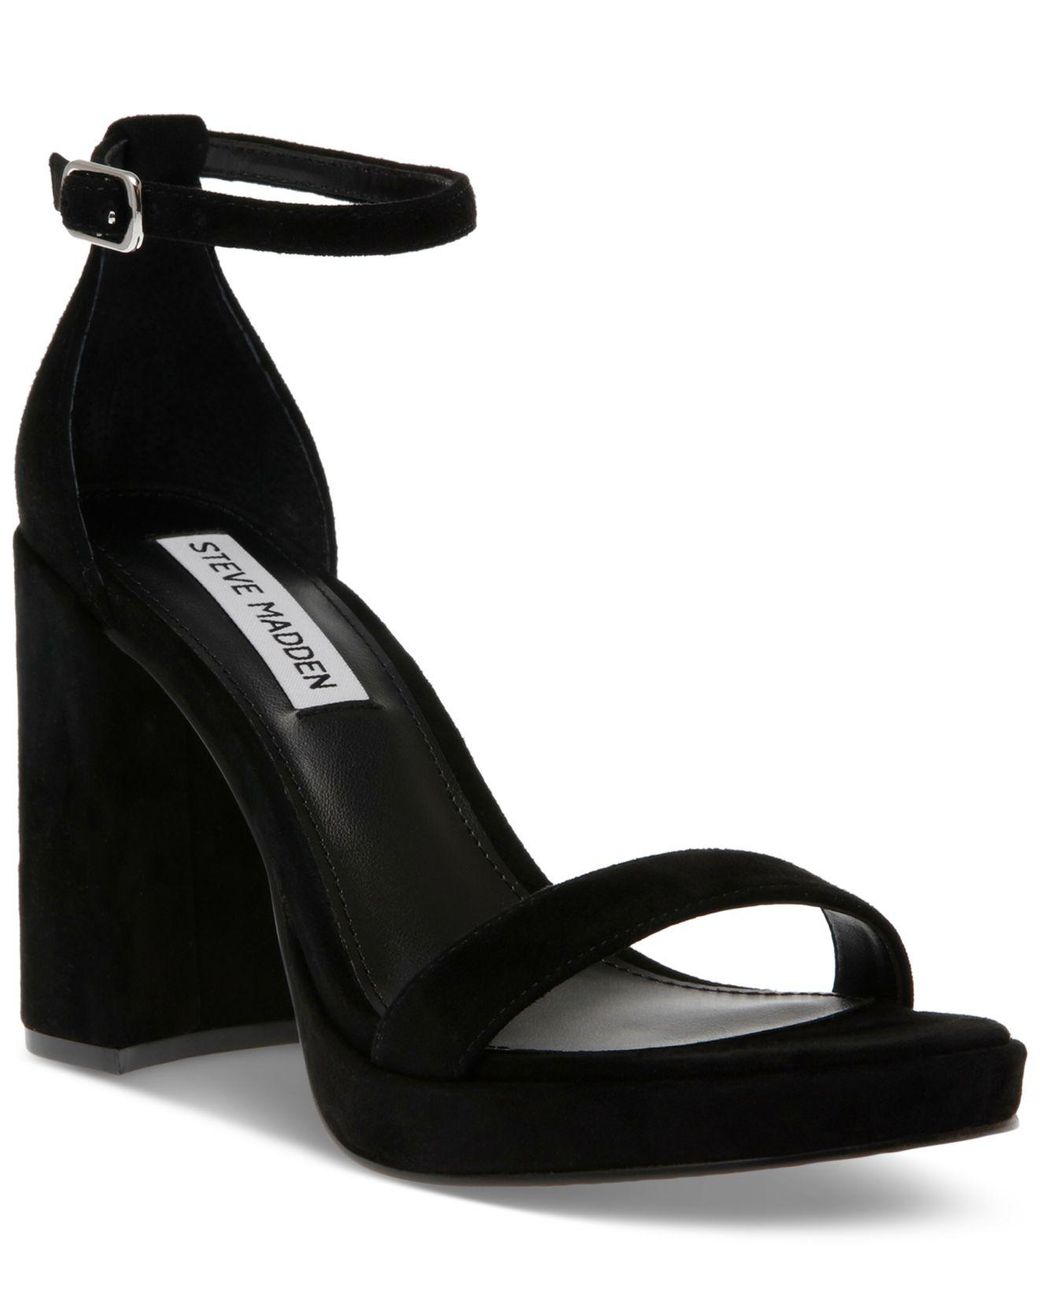 Steve Madden Susan Two-piece Platform Dress Sandals in Black | Lyst